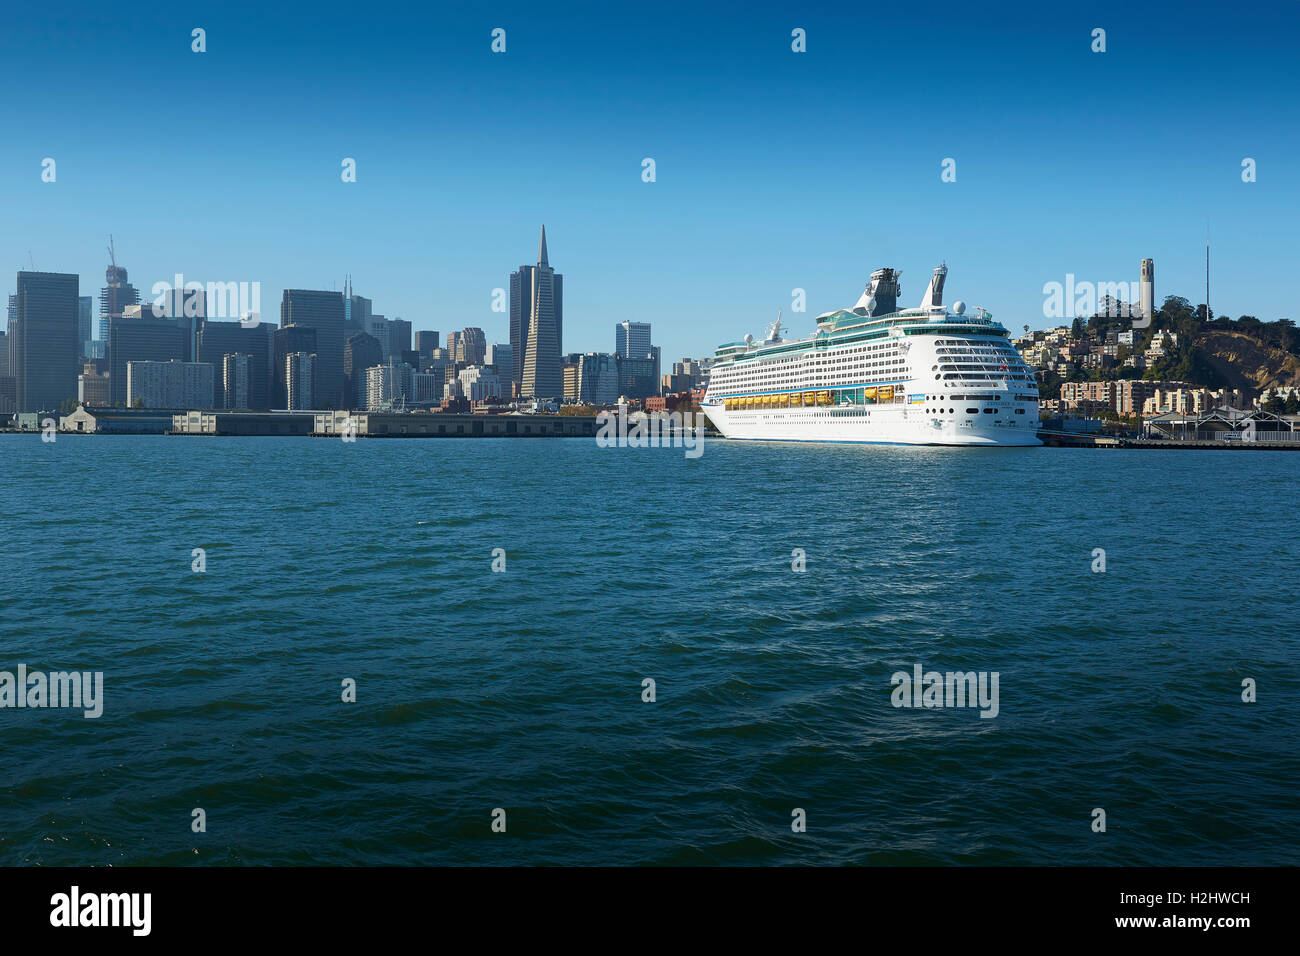 The Royal Caribbean Cruise Liner, Explorer of the Seas, Moored At Pier 27, San Francisco. Stock Photo